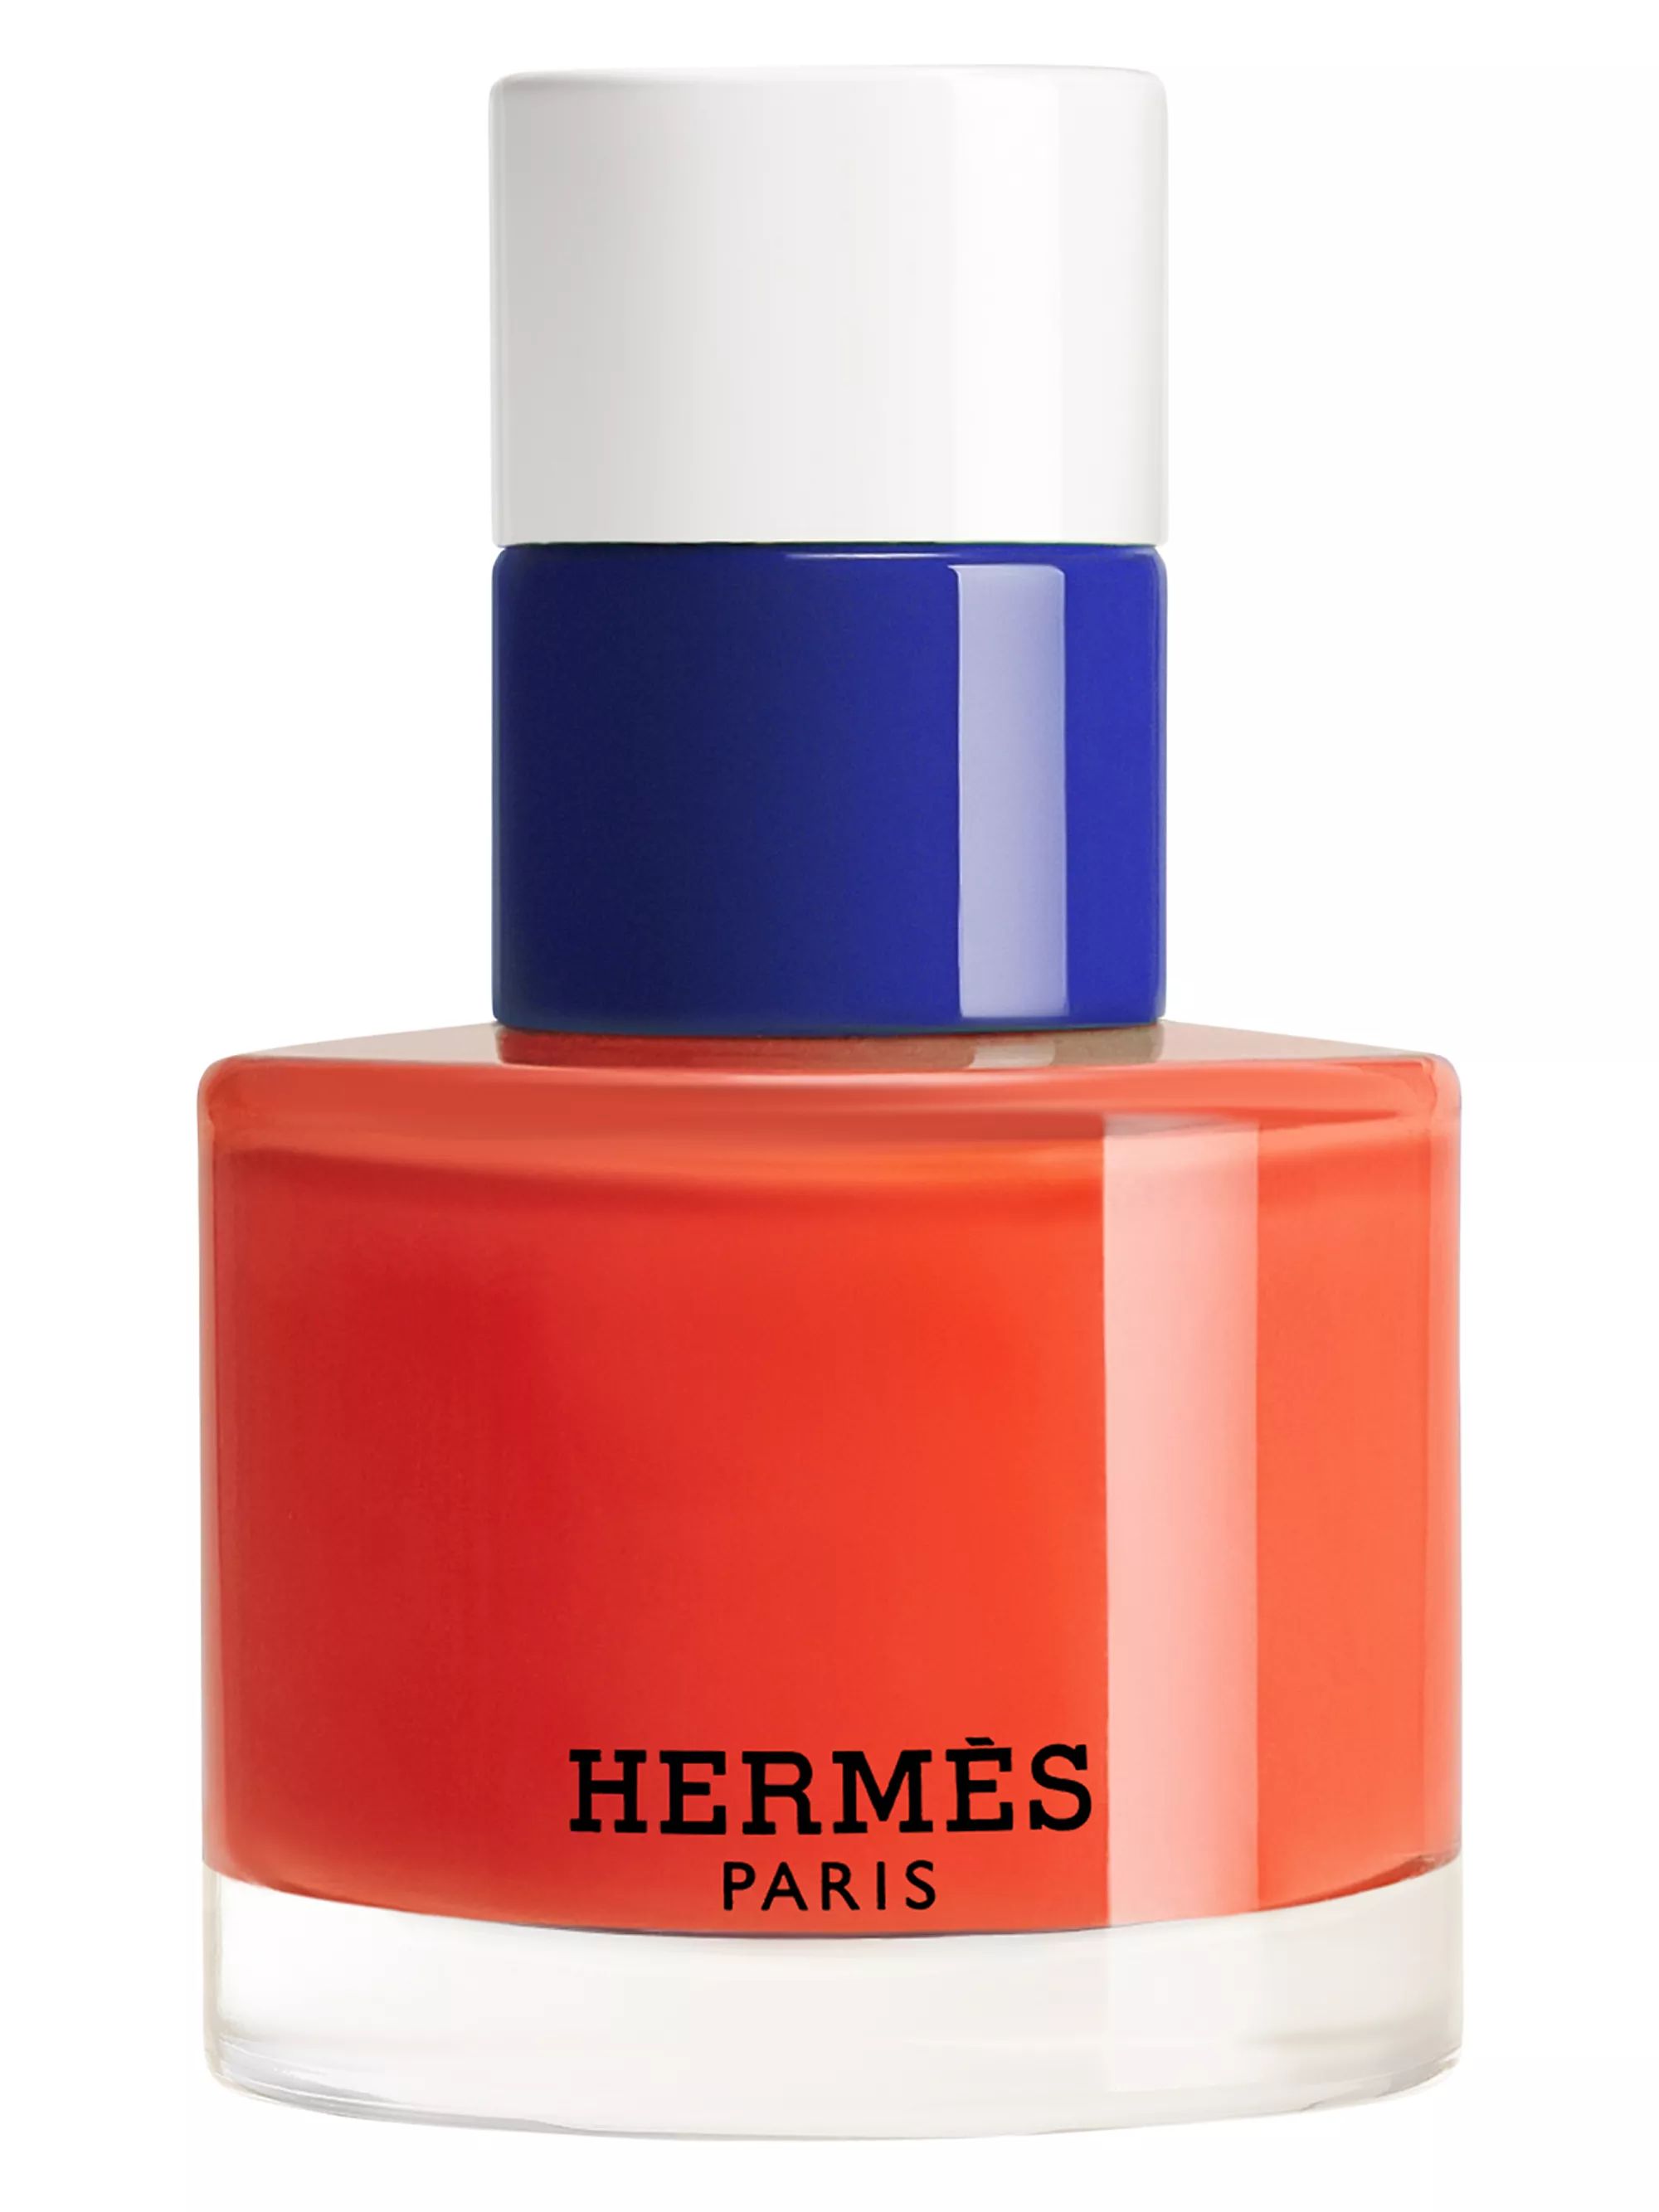 Les Mains Hermès Limited Edition Enamel Polish | Saks Fifth Avenue